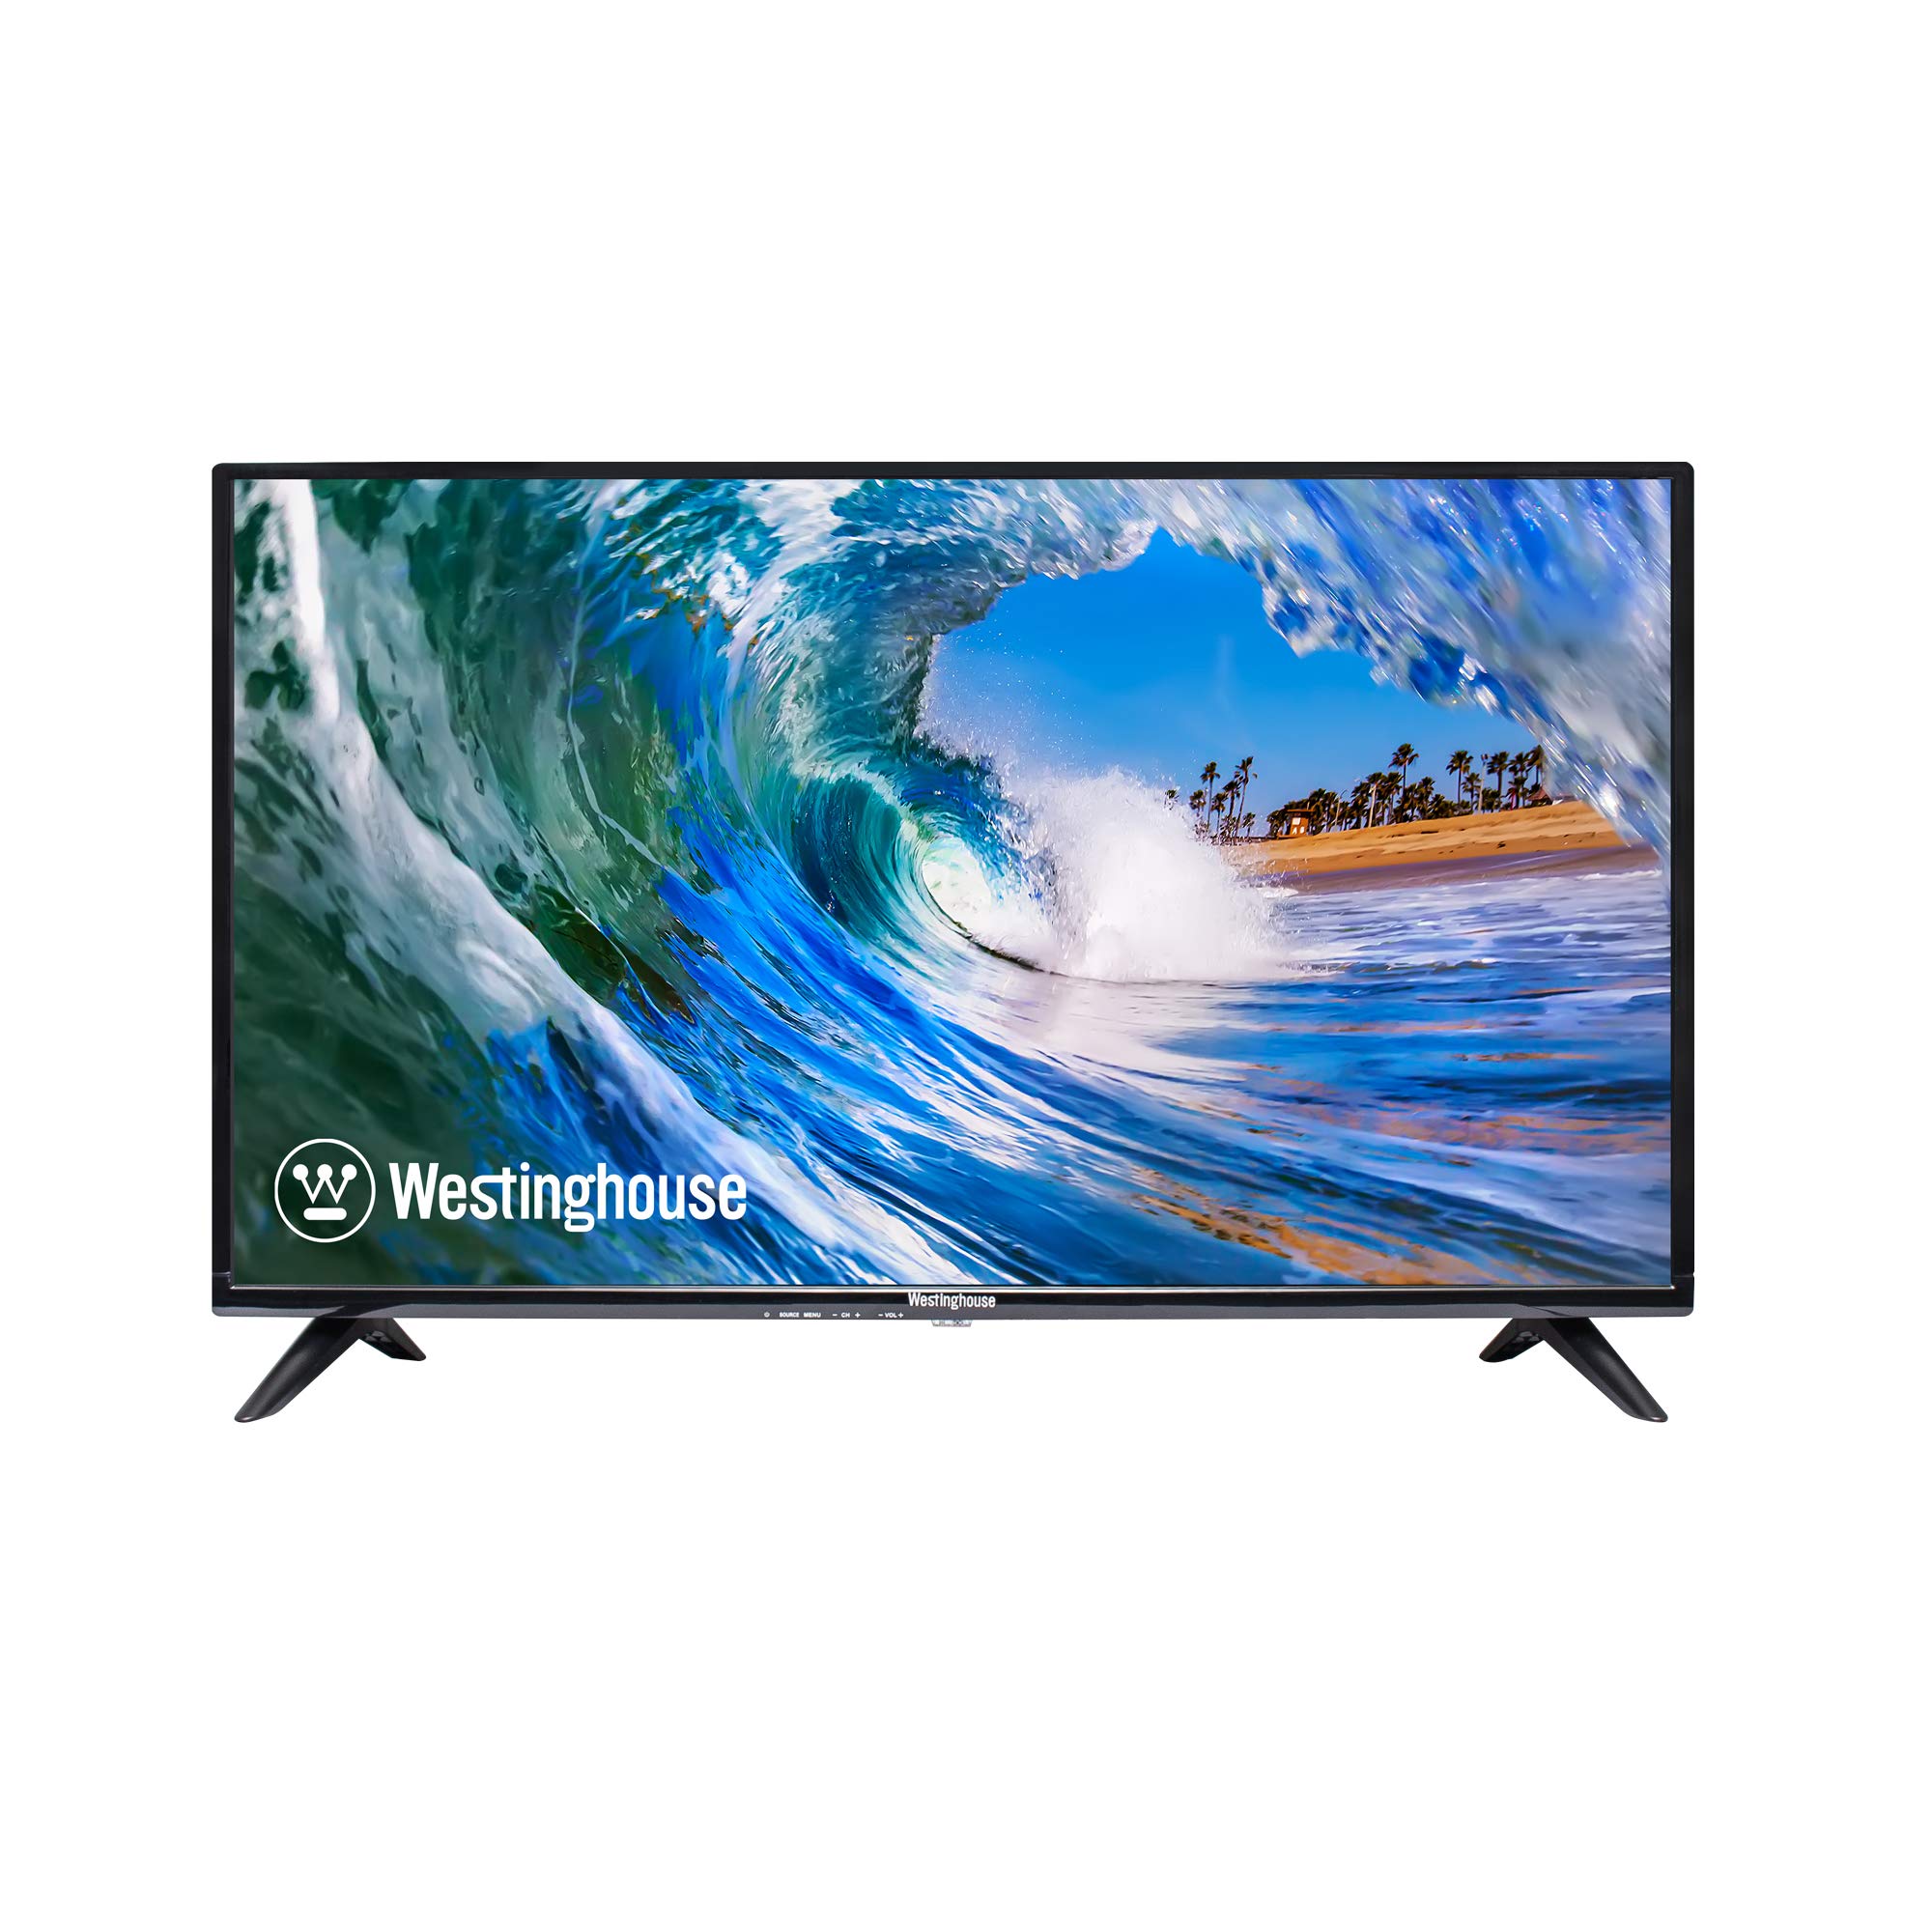 Westinghouse - 32" Class - LED - 720p - HDTV - Refrubished - Grade B WD32HB1120-C_B UPC  - WD32HB1120-C_B